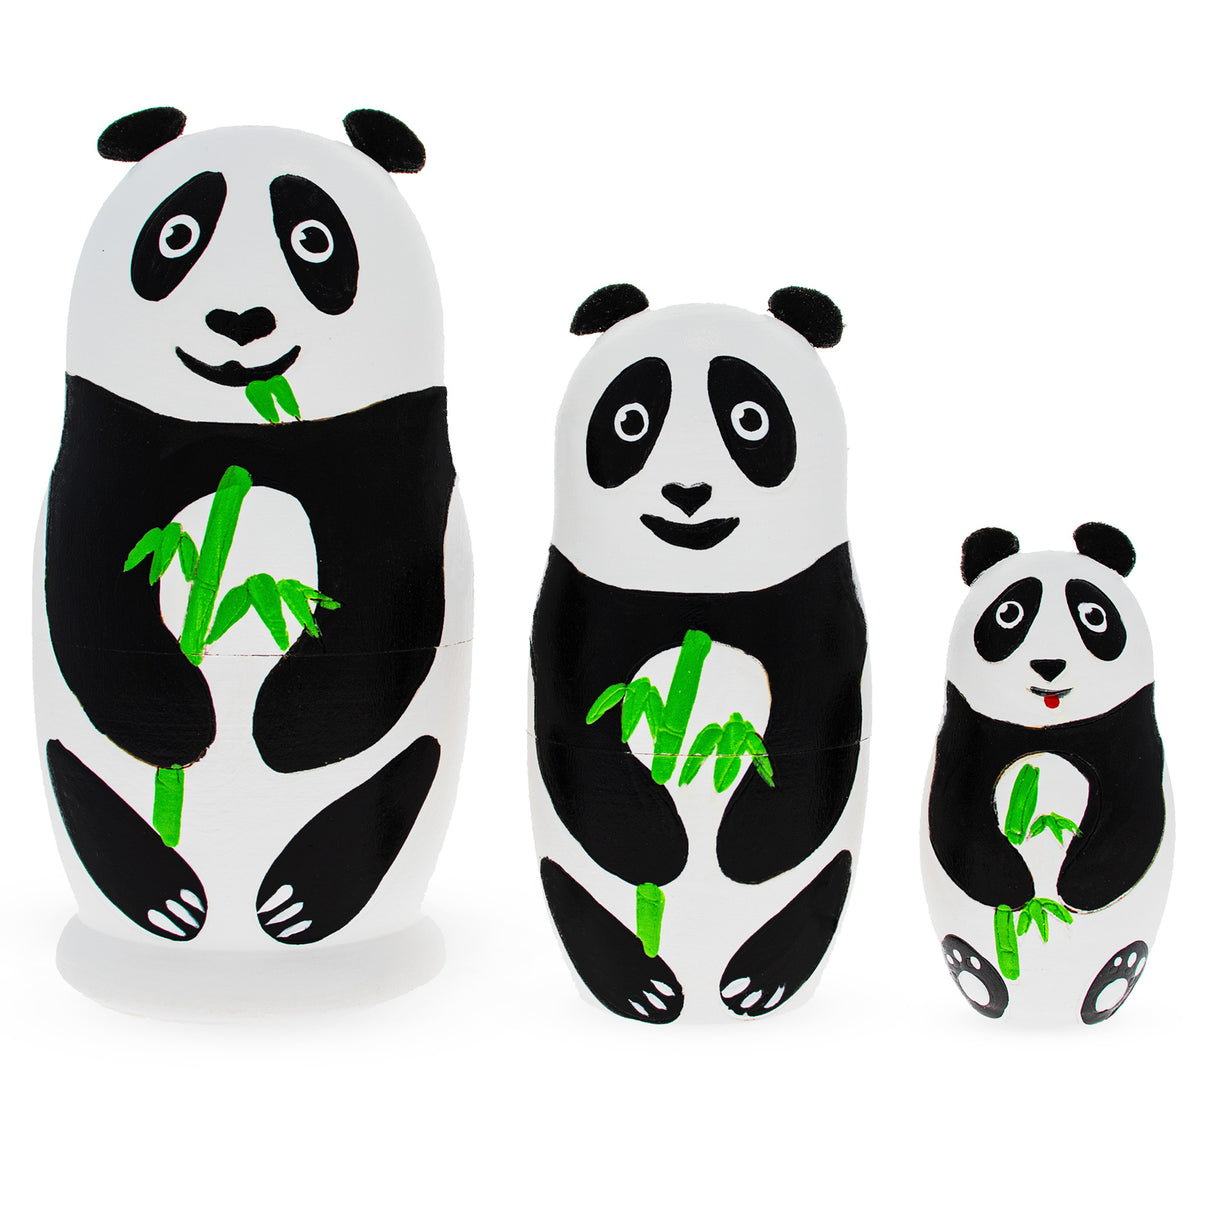 Wood Set of 3 Panda Family Wooden Nesting Dolls in Black color